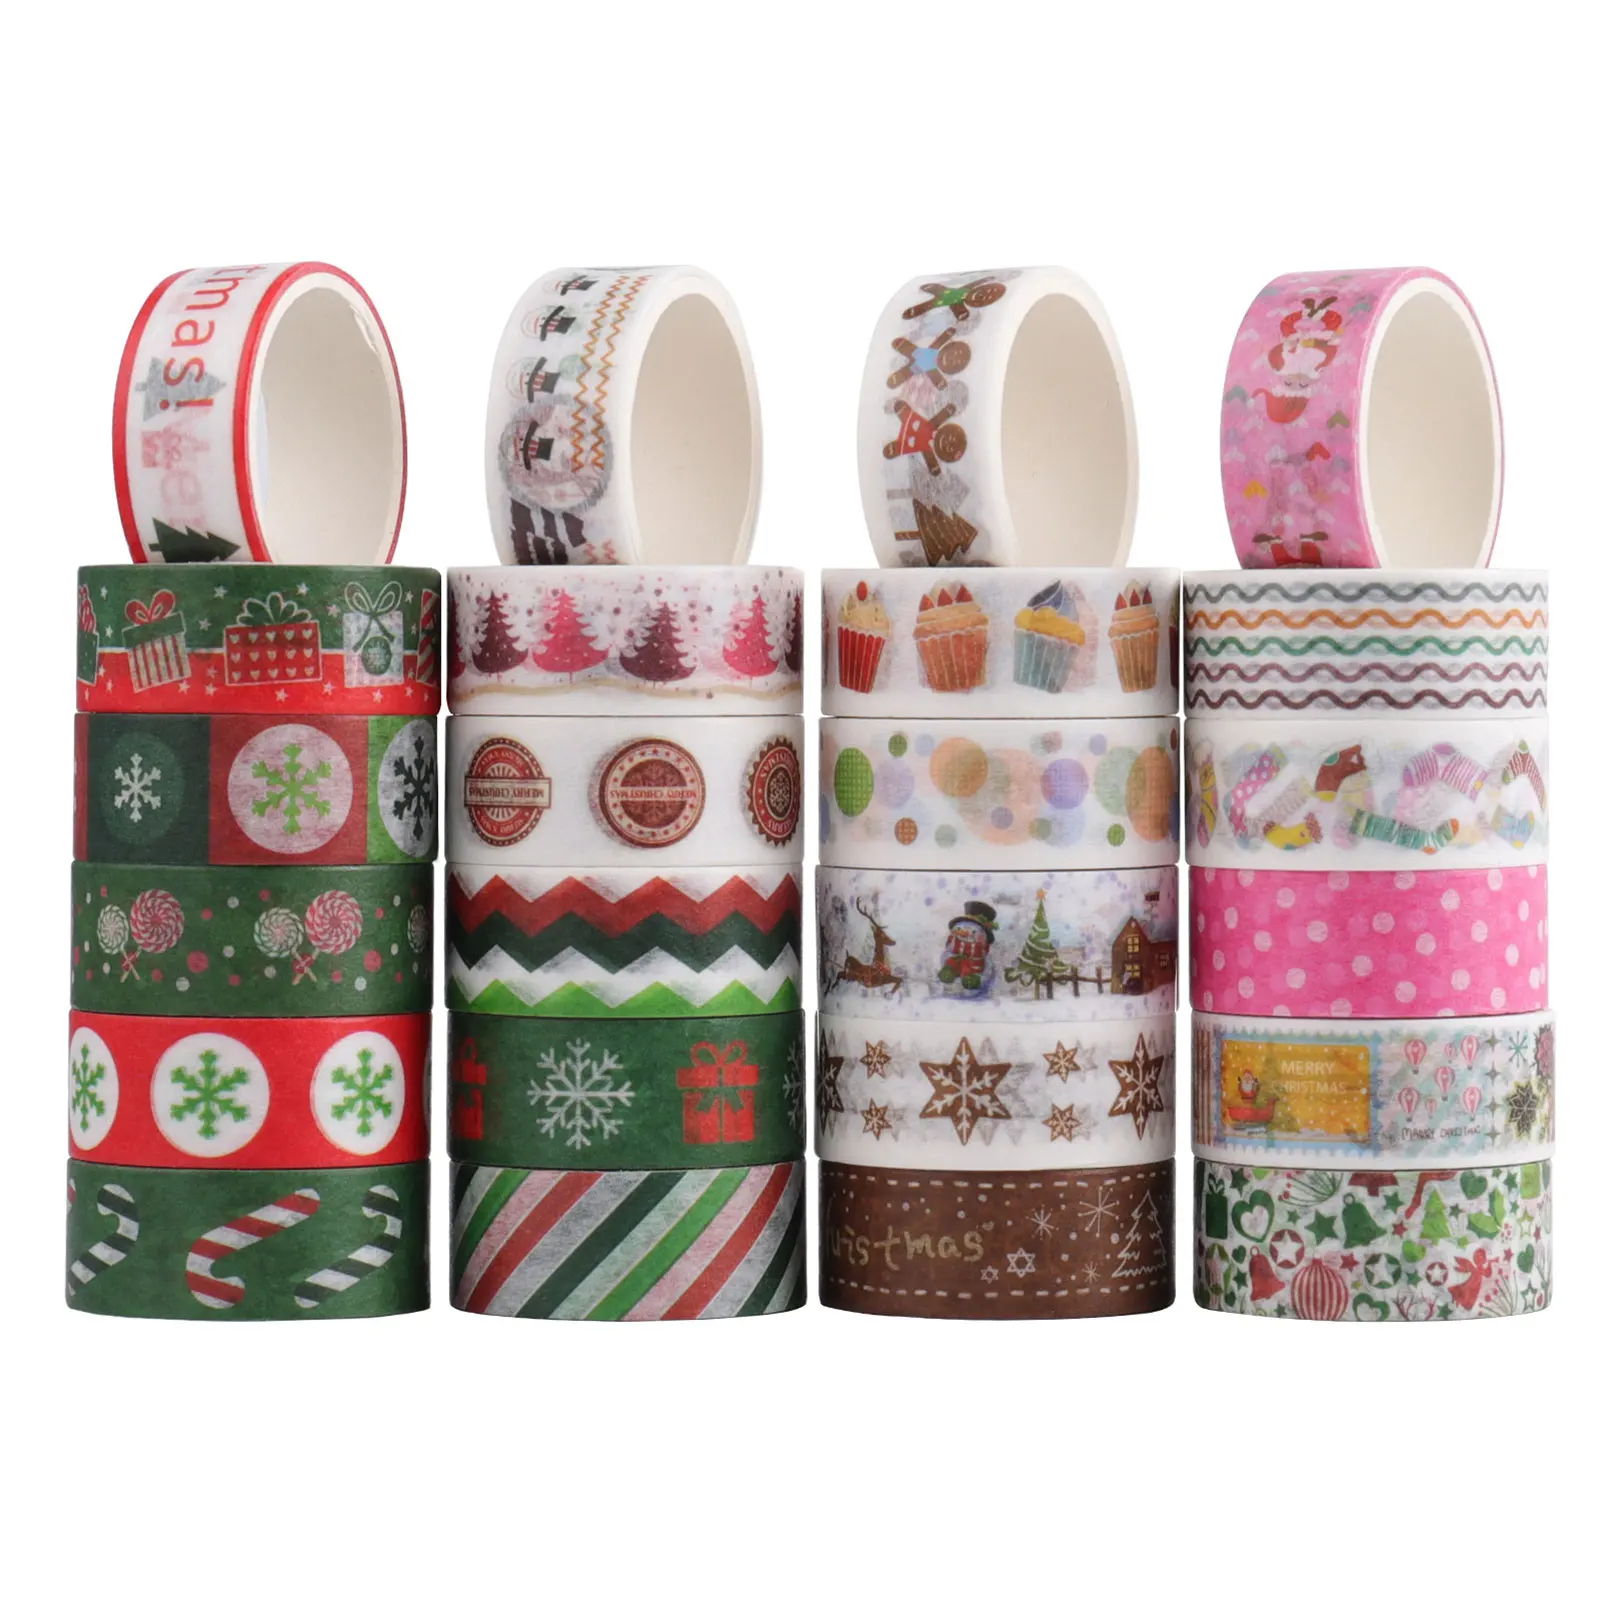 

24pcs/set Merry Christmas Washi Tape Box-Packed Holiday gift Decorative Scrapbook DIY Masking Tape Stationery Journal Supplies